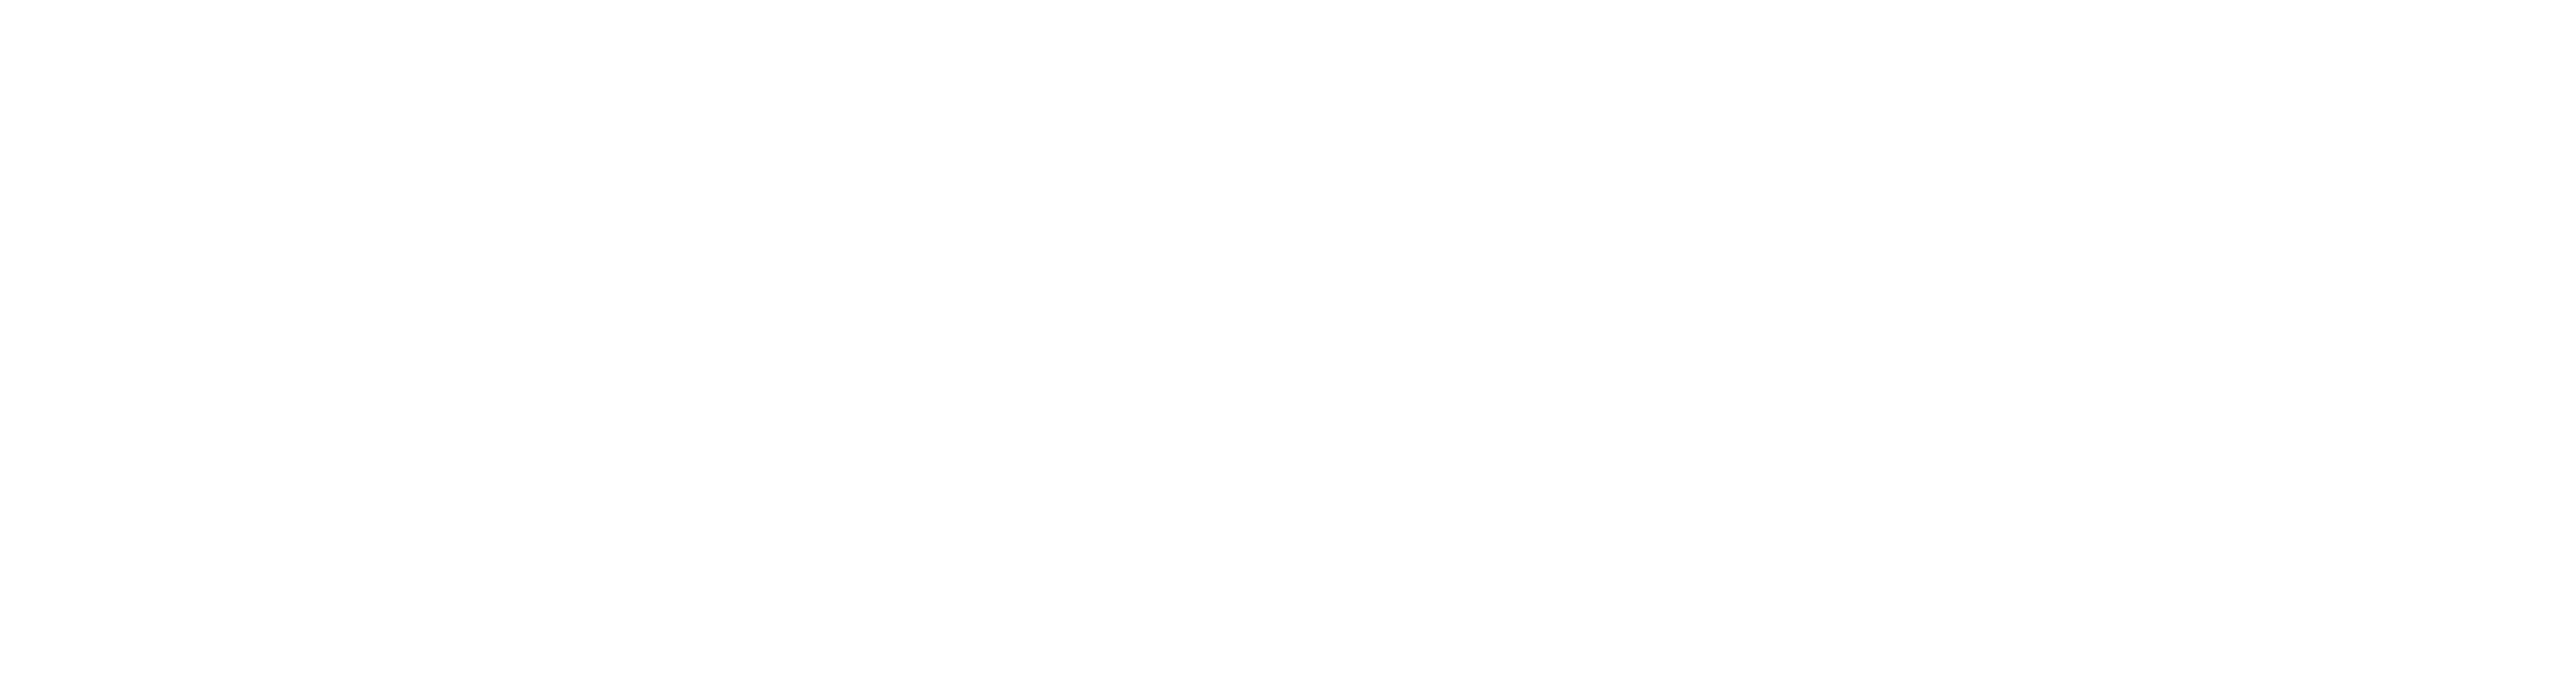 CHV AniCura Nordvet à La Madeleine logo